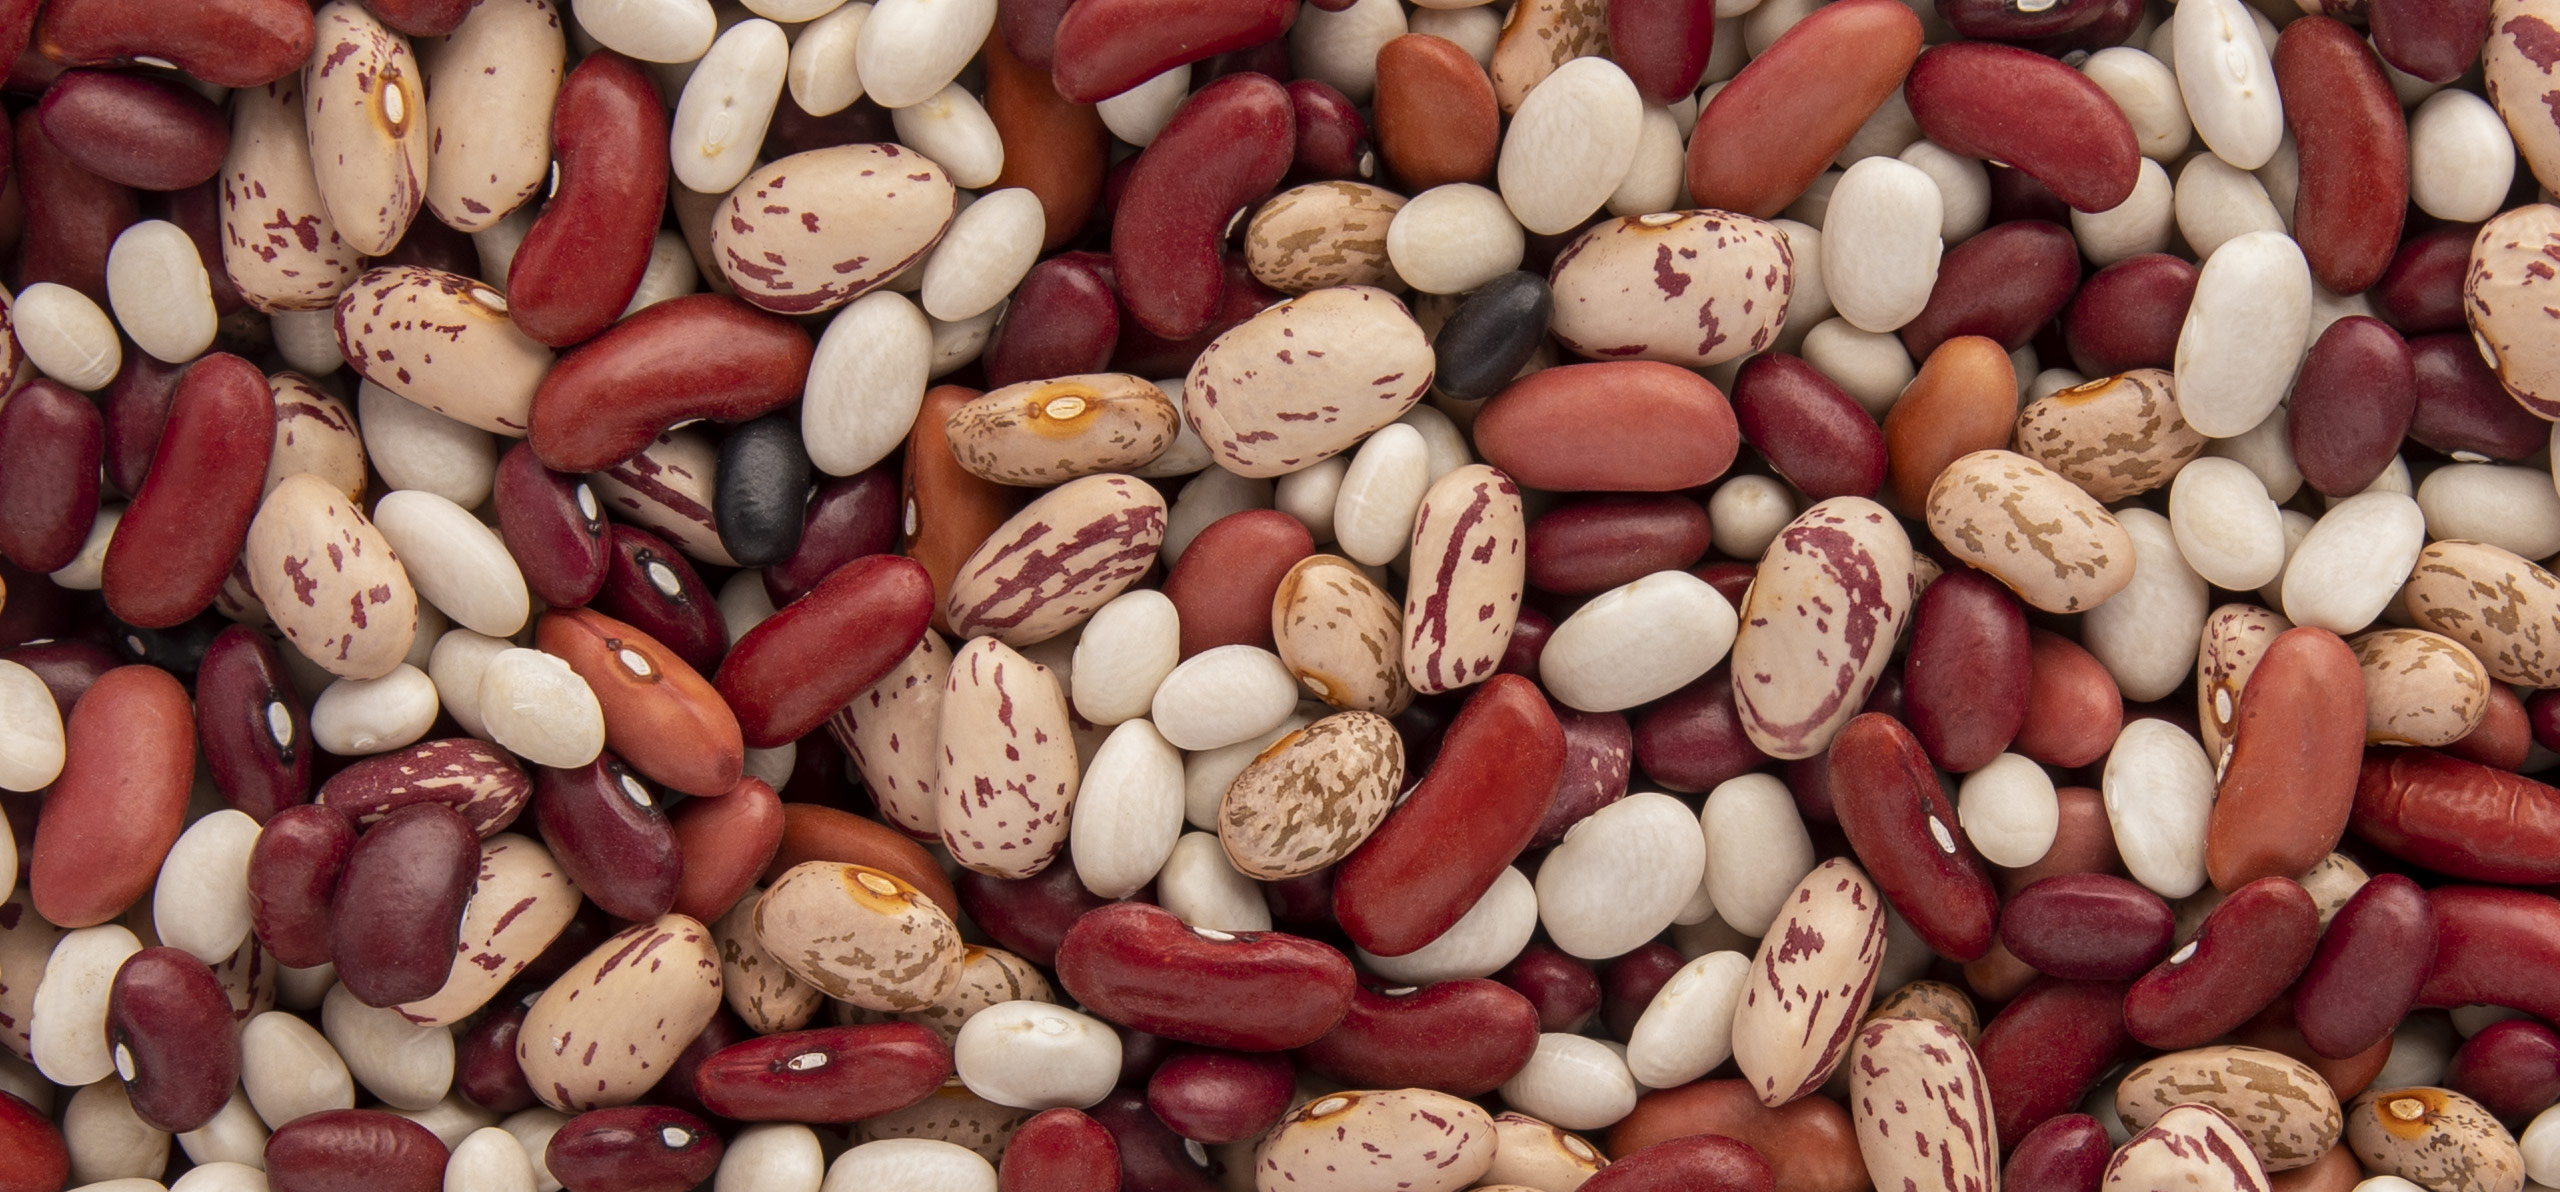 Michigan Dry Bean varieties